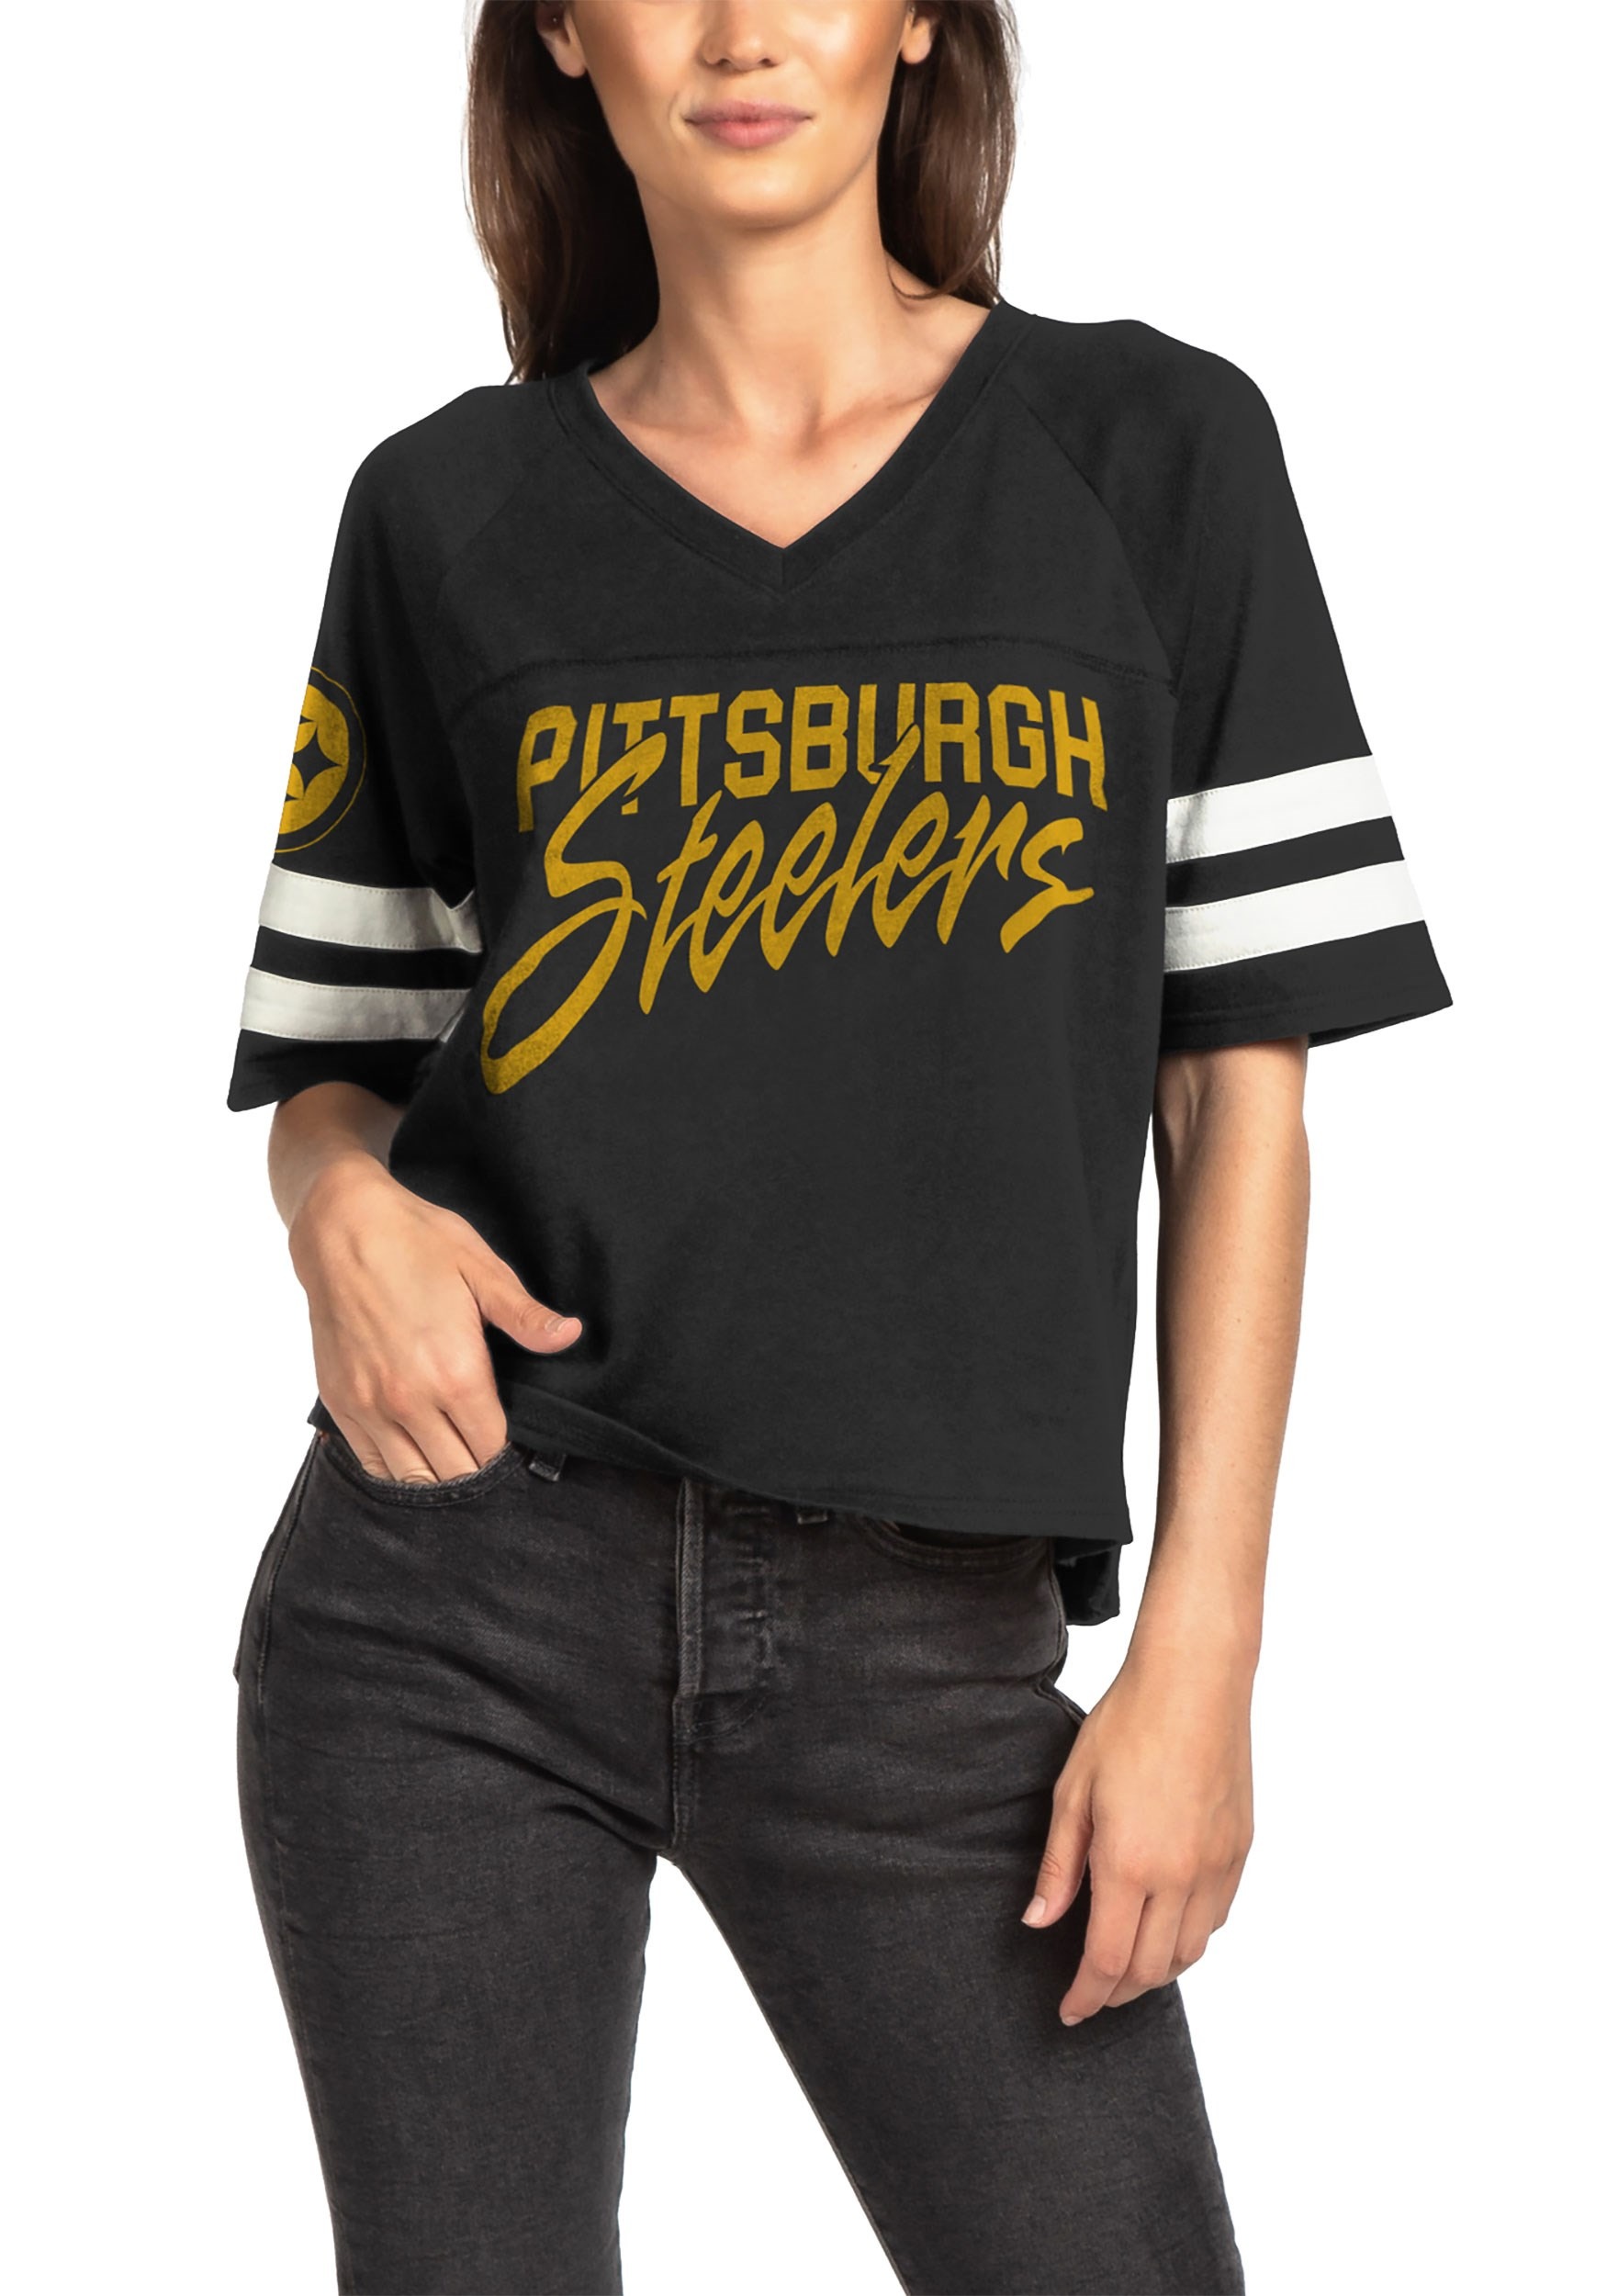 pittsburgh steelers womens shirt